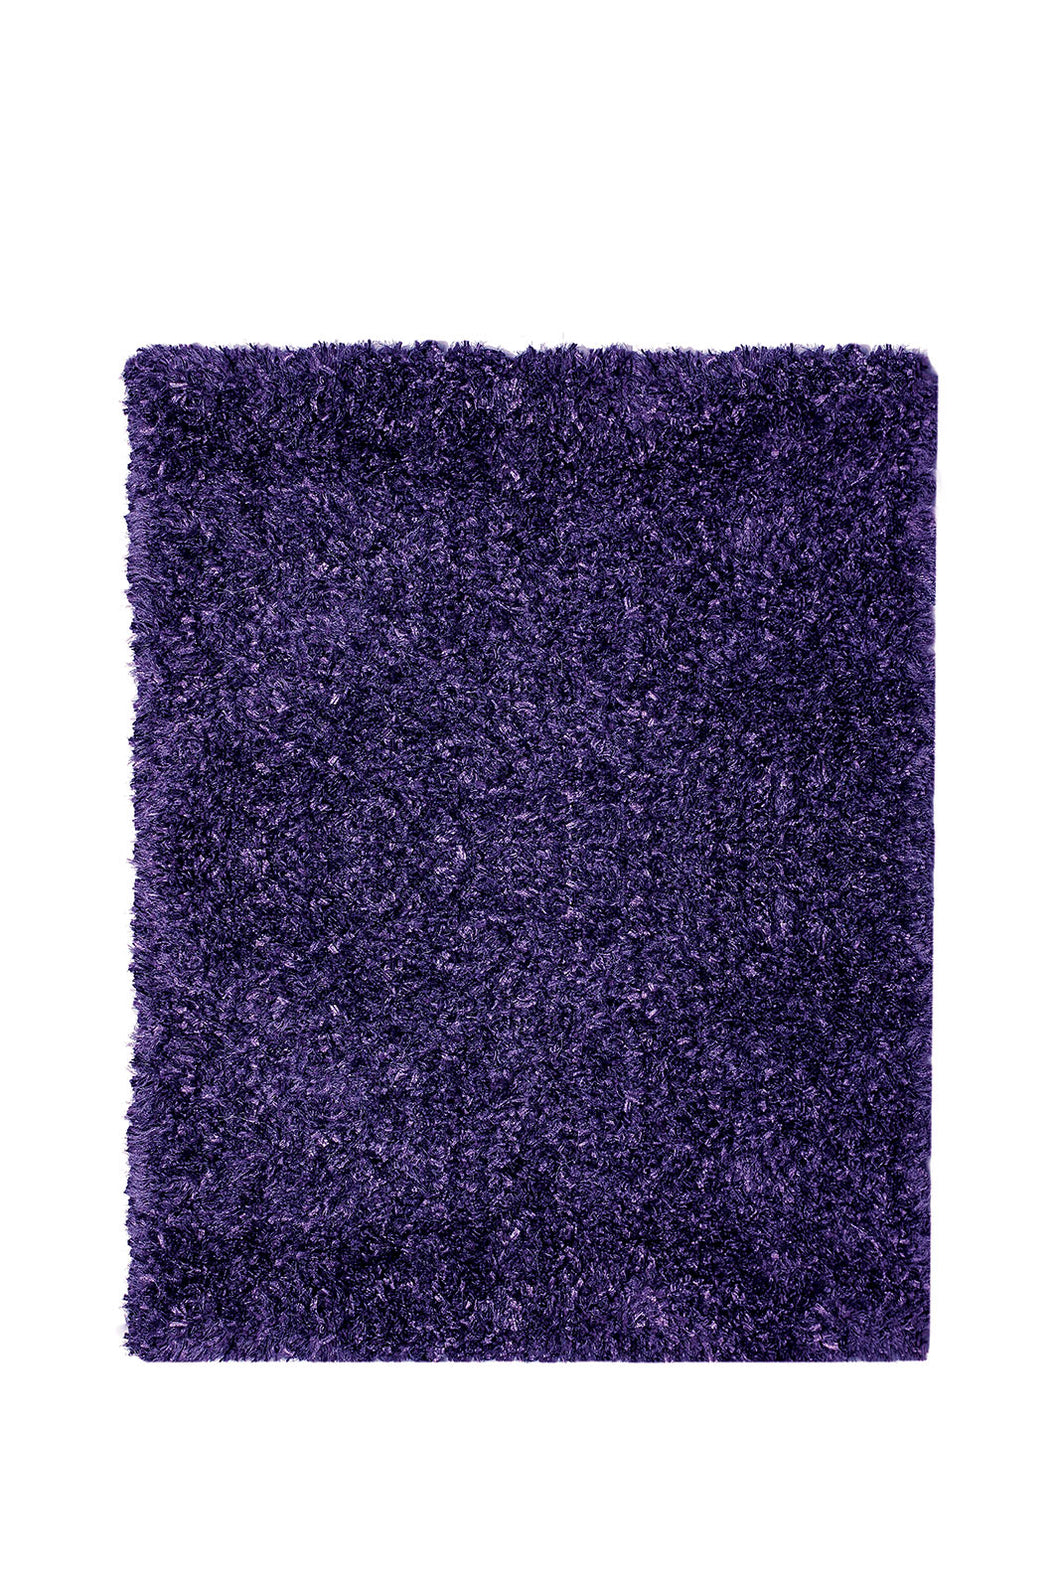 Annmarie Purple 5' X 8' Area Rug